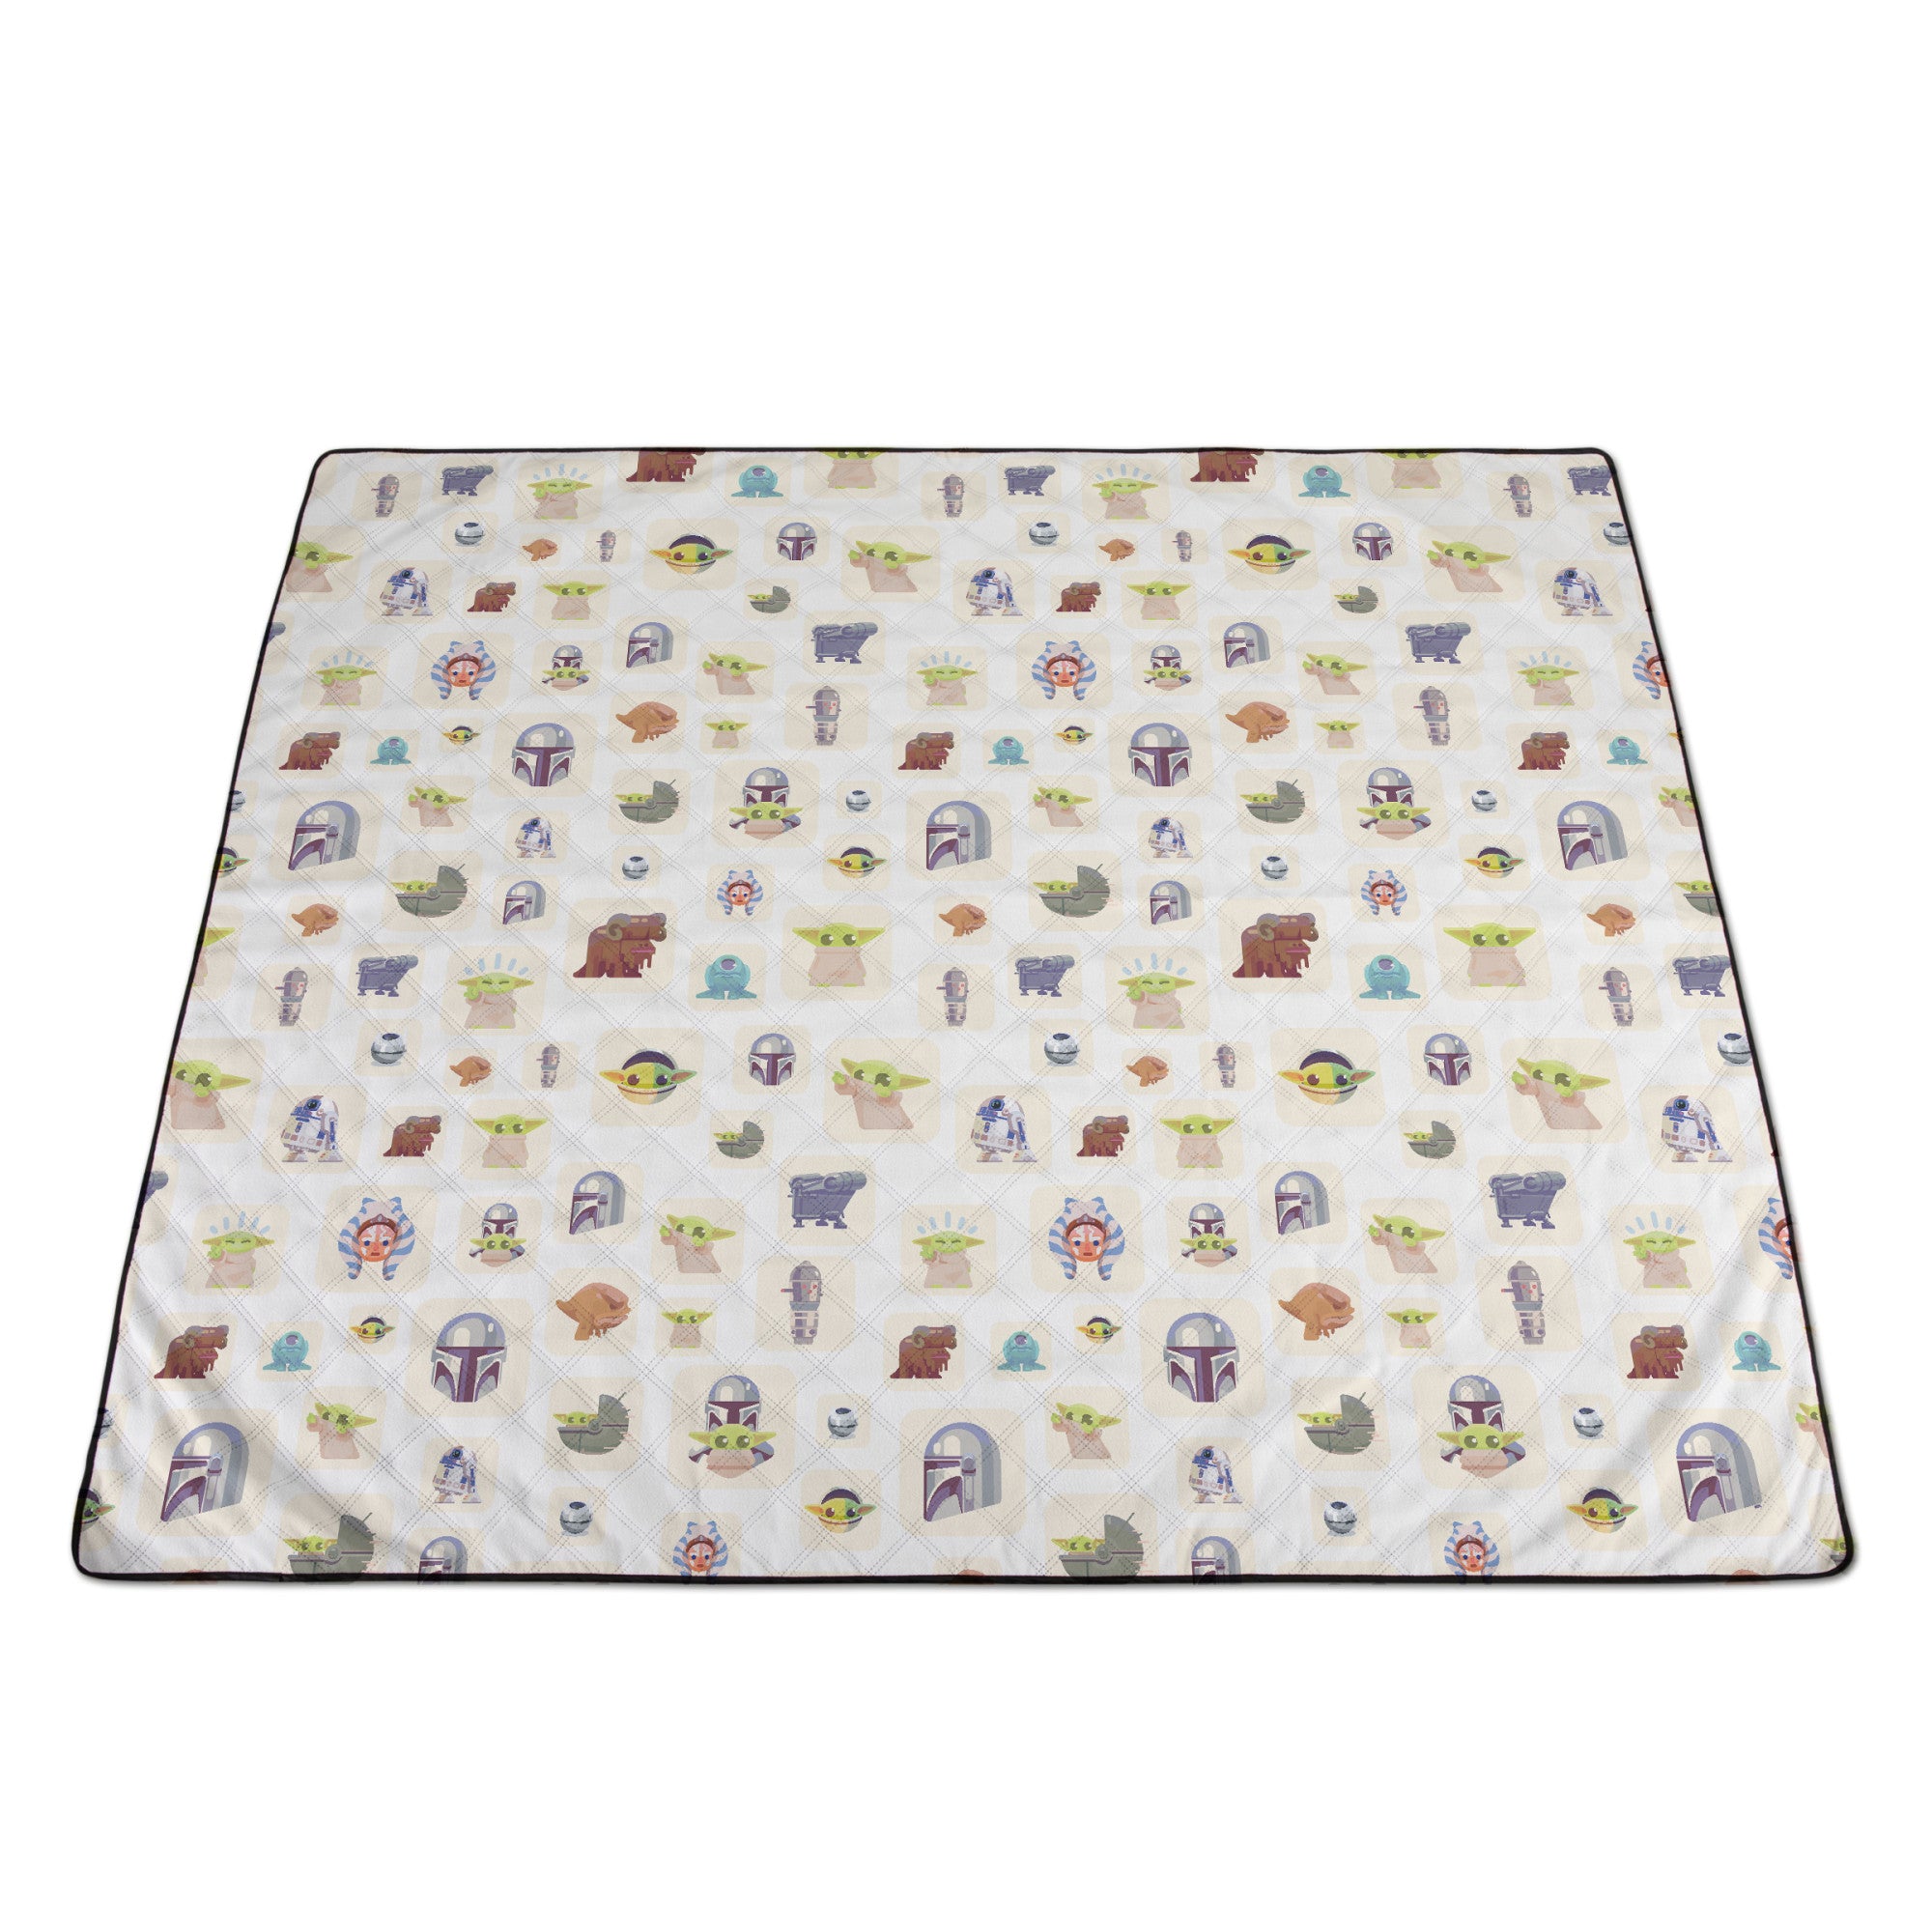 The Child - Mandalorian - Impresa Picnic Blanket